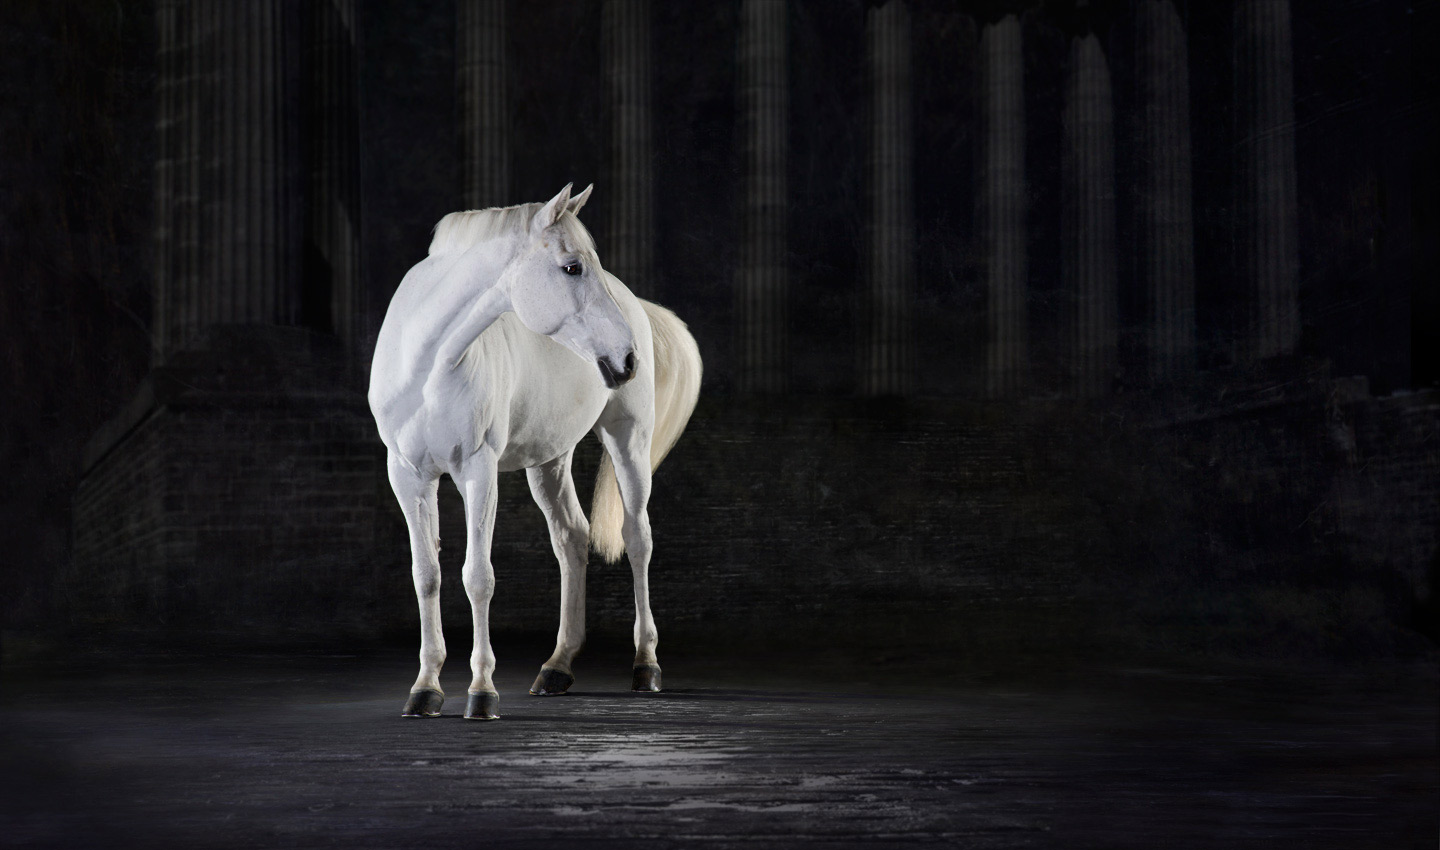 Athena-white-horse-animal-equestrian-portrait-photography-photographer_Lindsay_Robertson